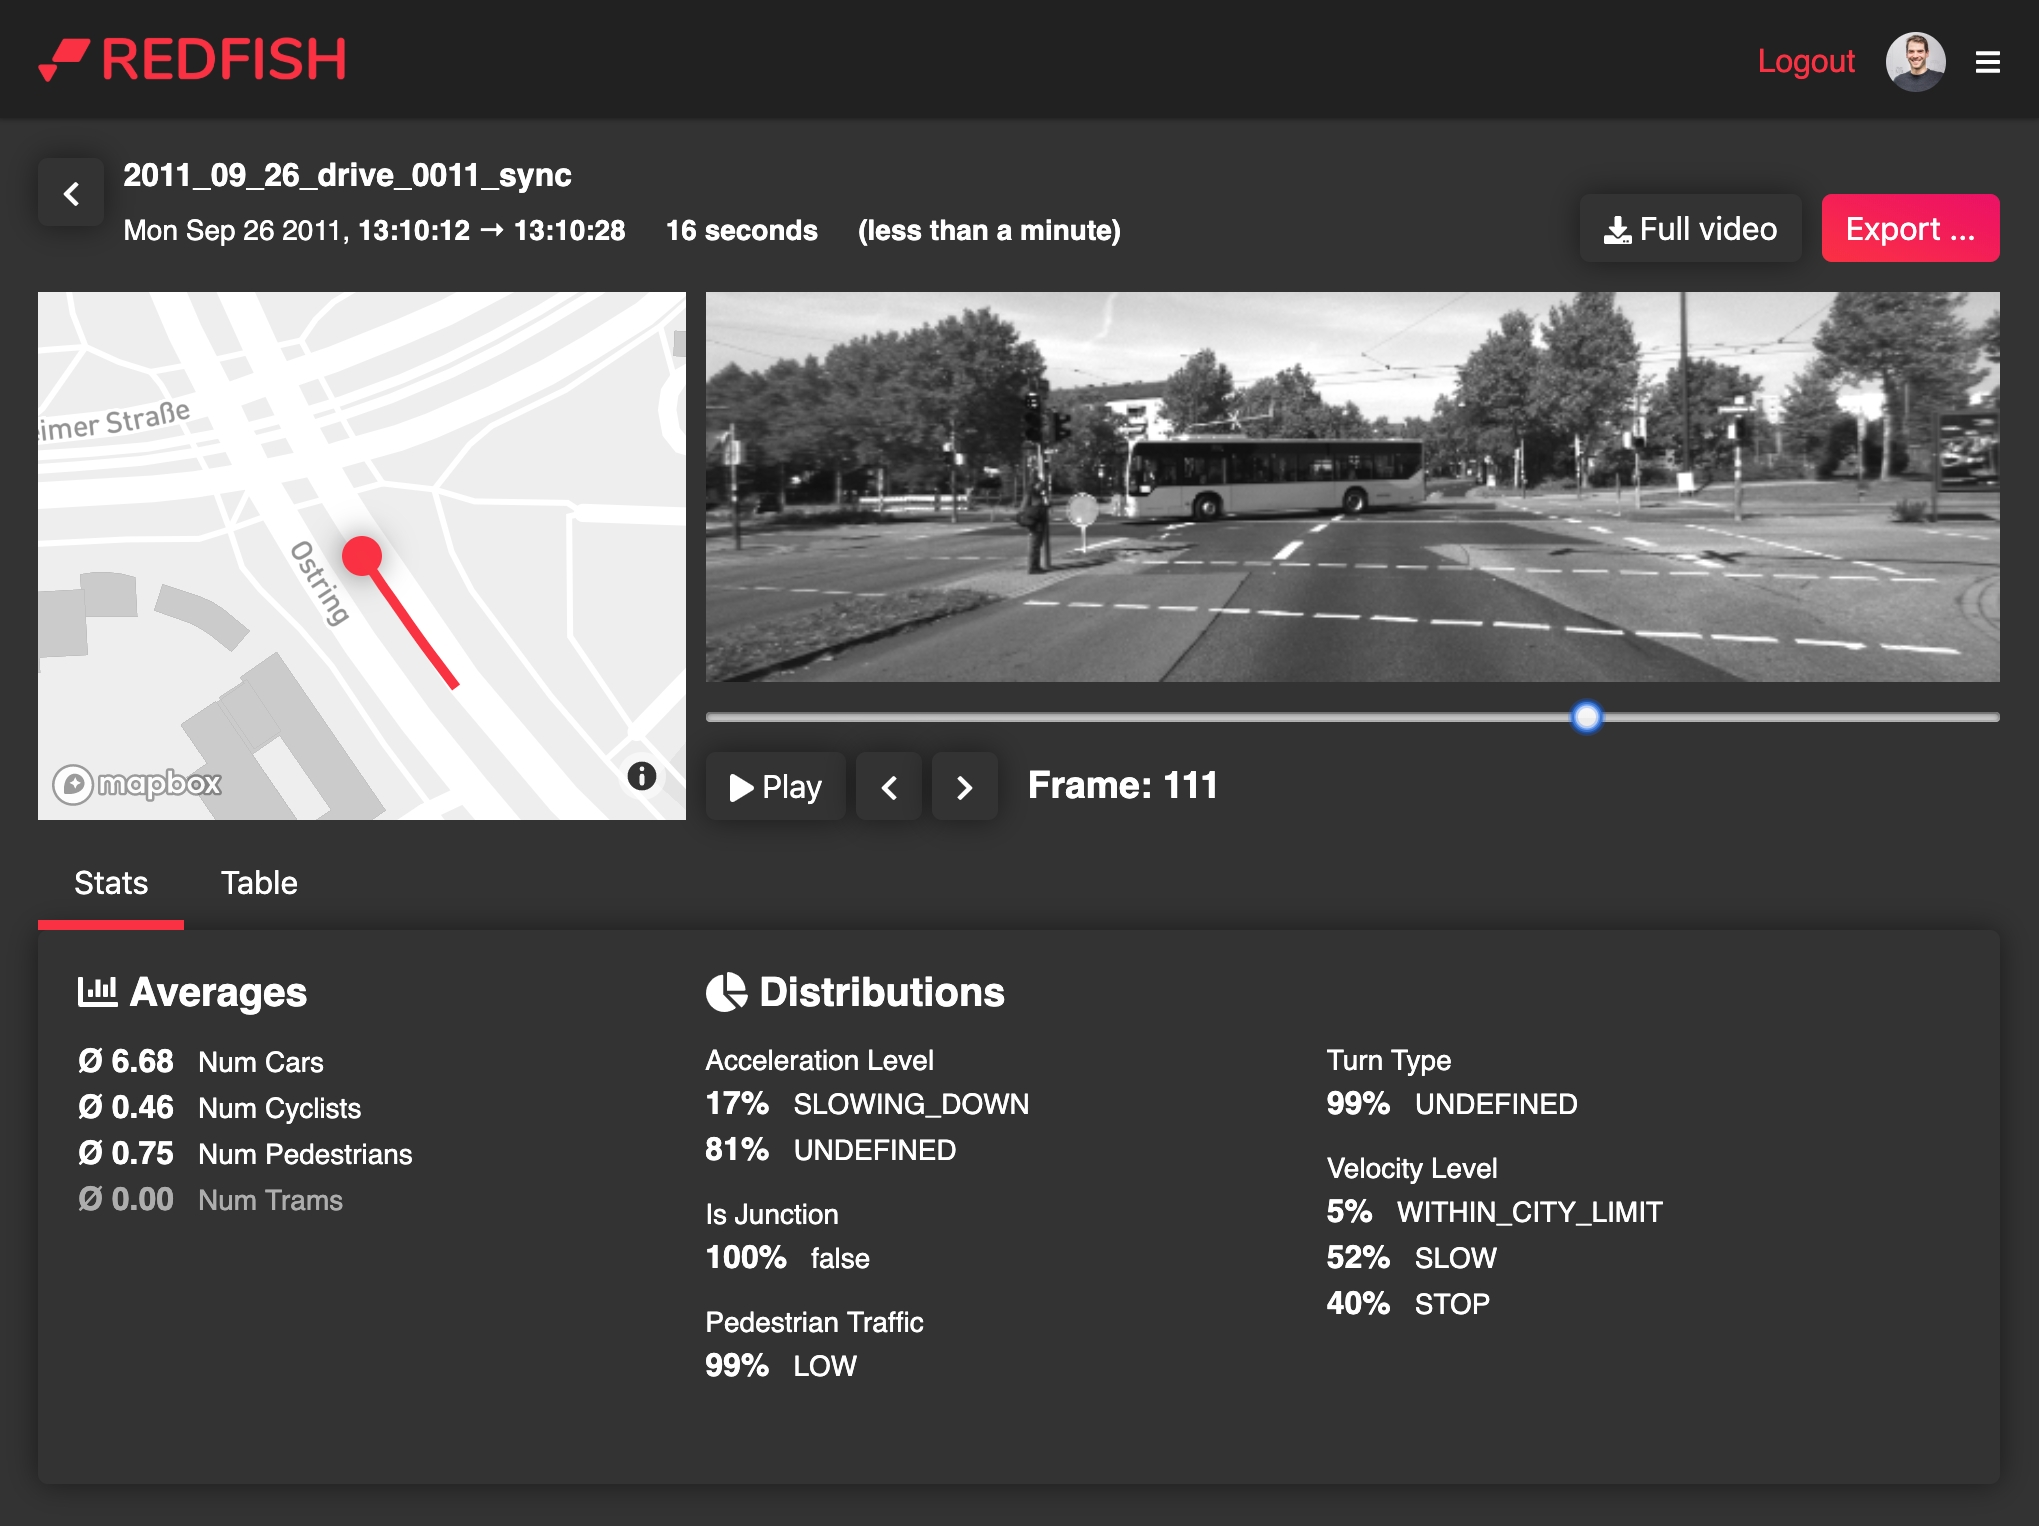 Main image of SiaSearch (prev. 'Redfish')